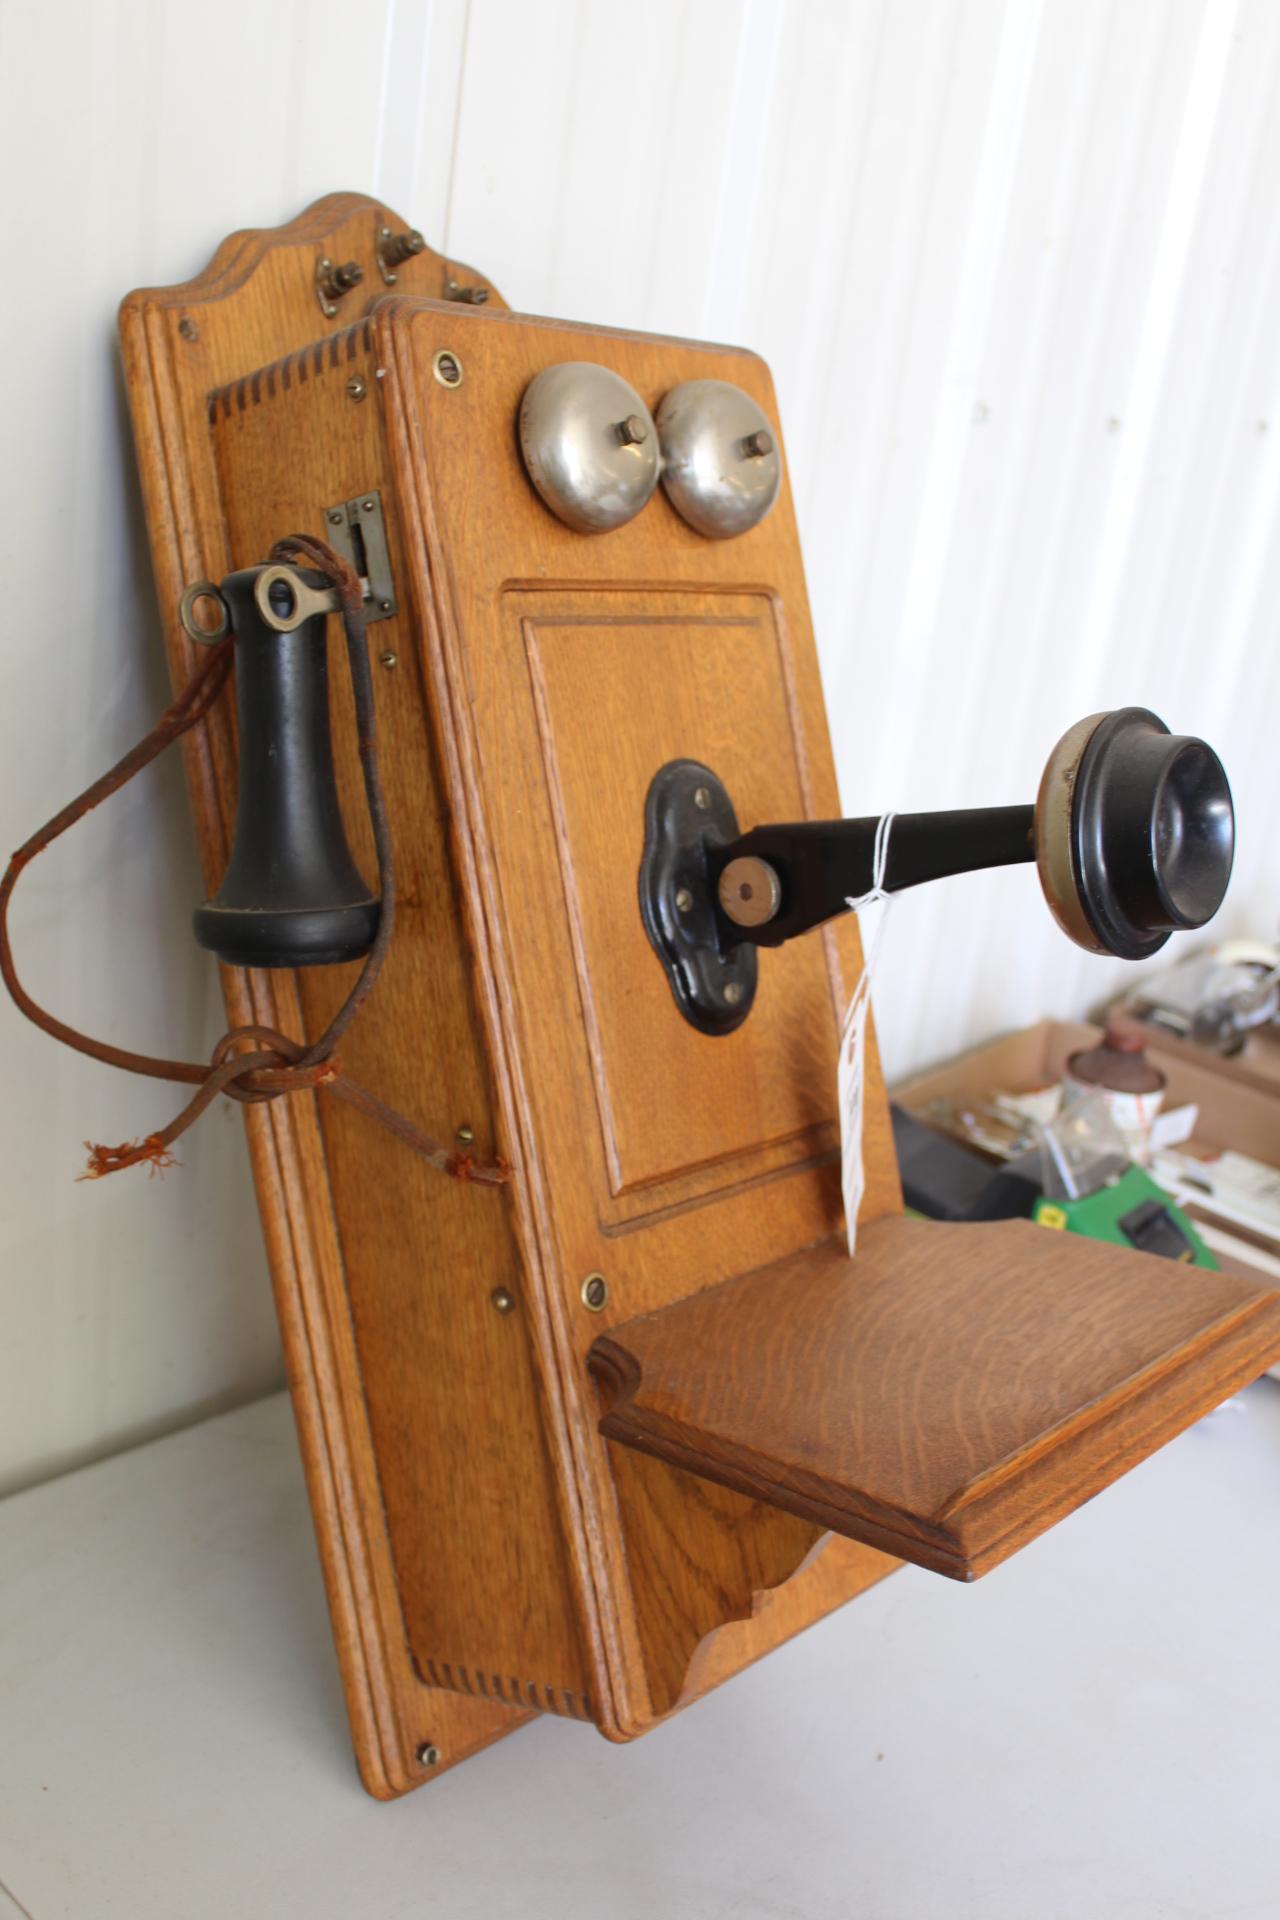 Antique wall crank phone, crank handle needs repair